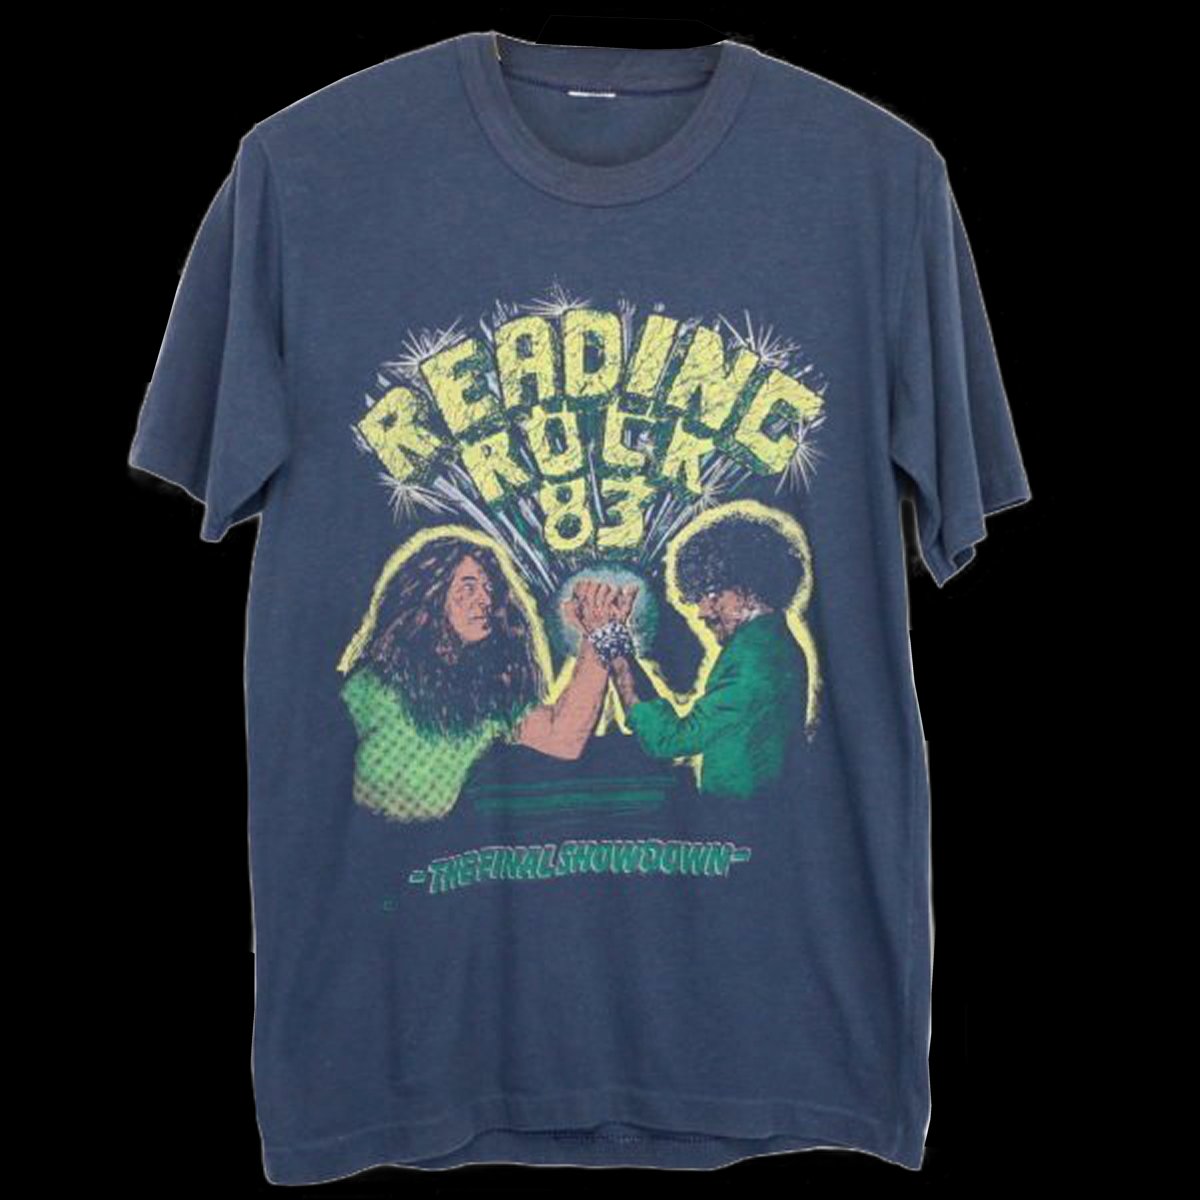 Texas Flood Tour T-Shirt - 1983 Reading Festival